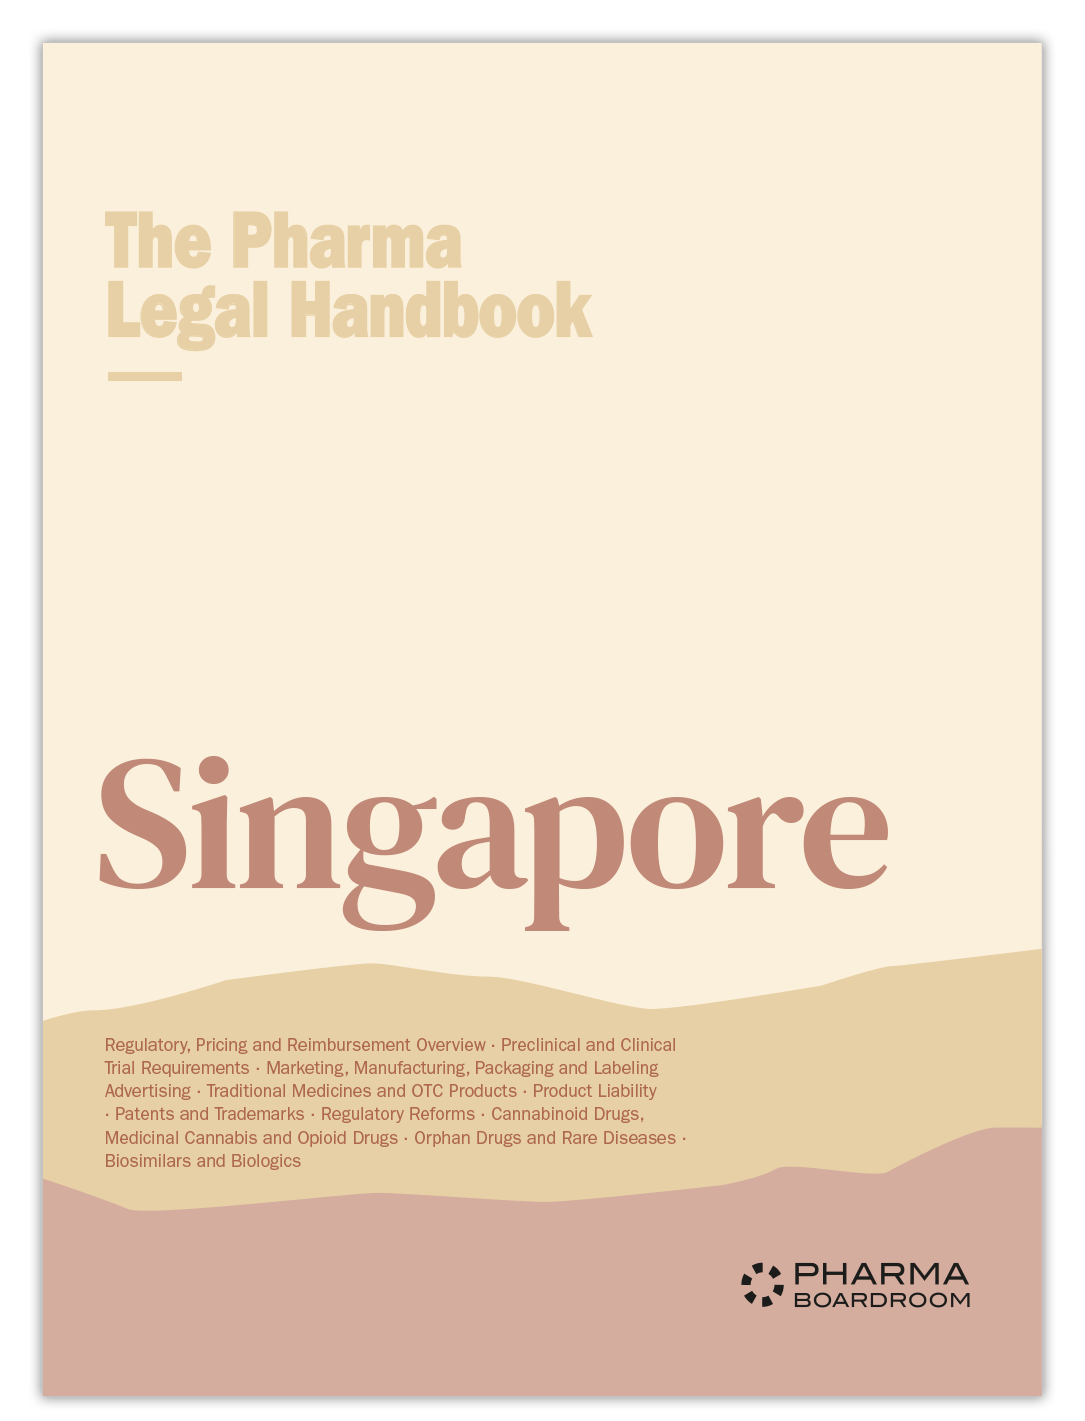 The Pharma Legal Handbook: Singapore